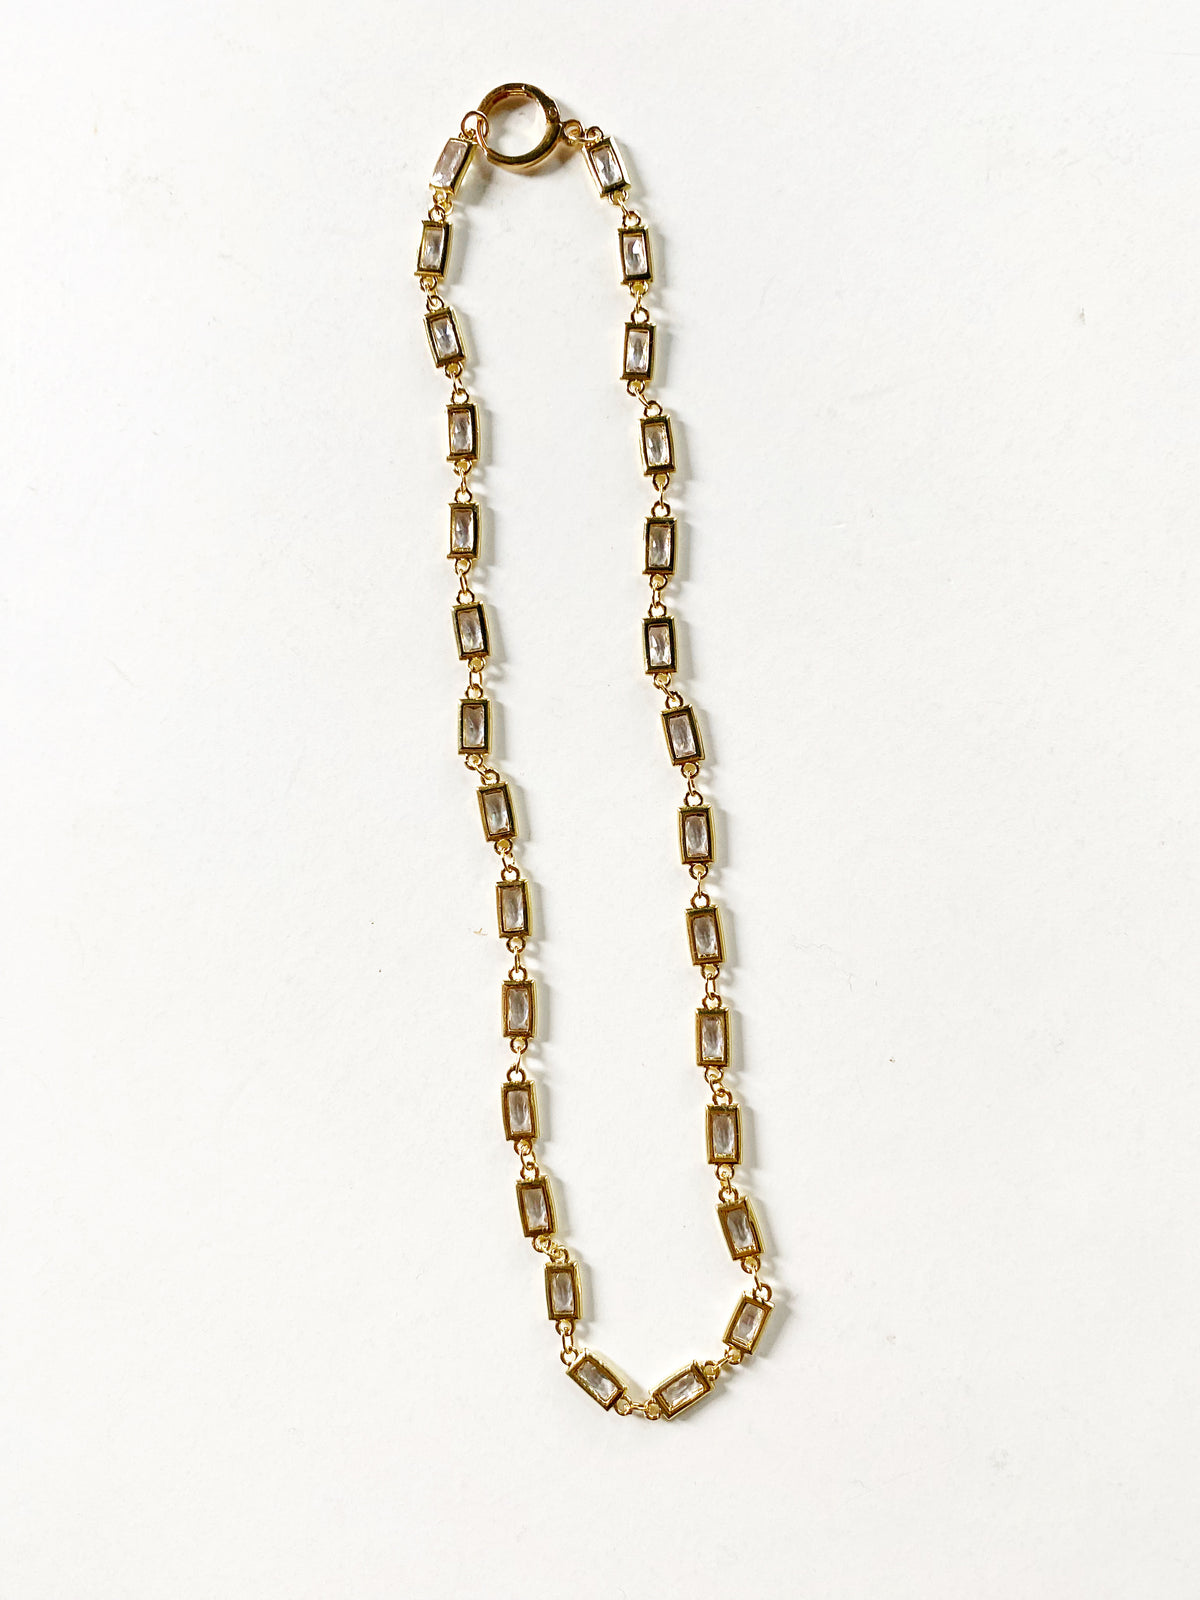 Bad Habits Choker Necklace. 24K Gold Filled CZ Bezel Chain